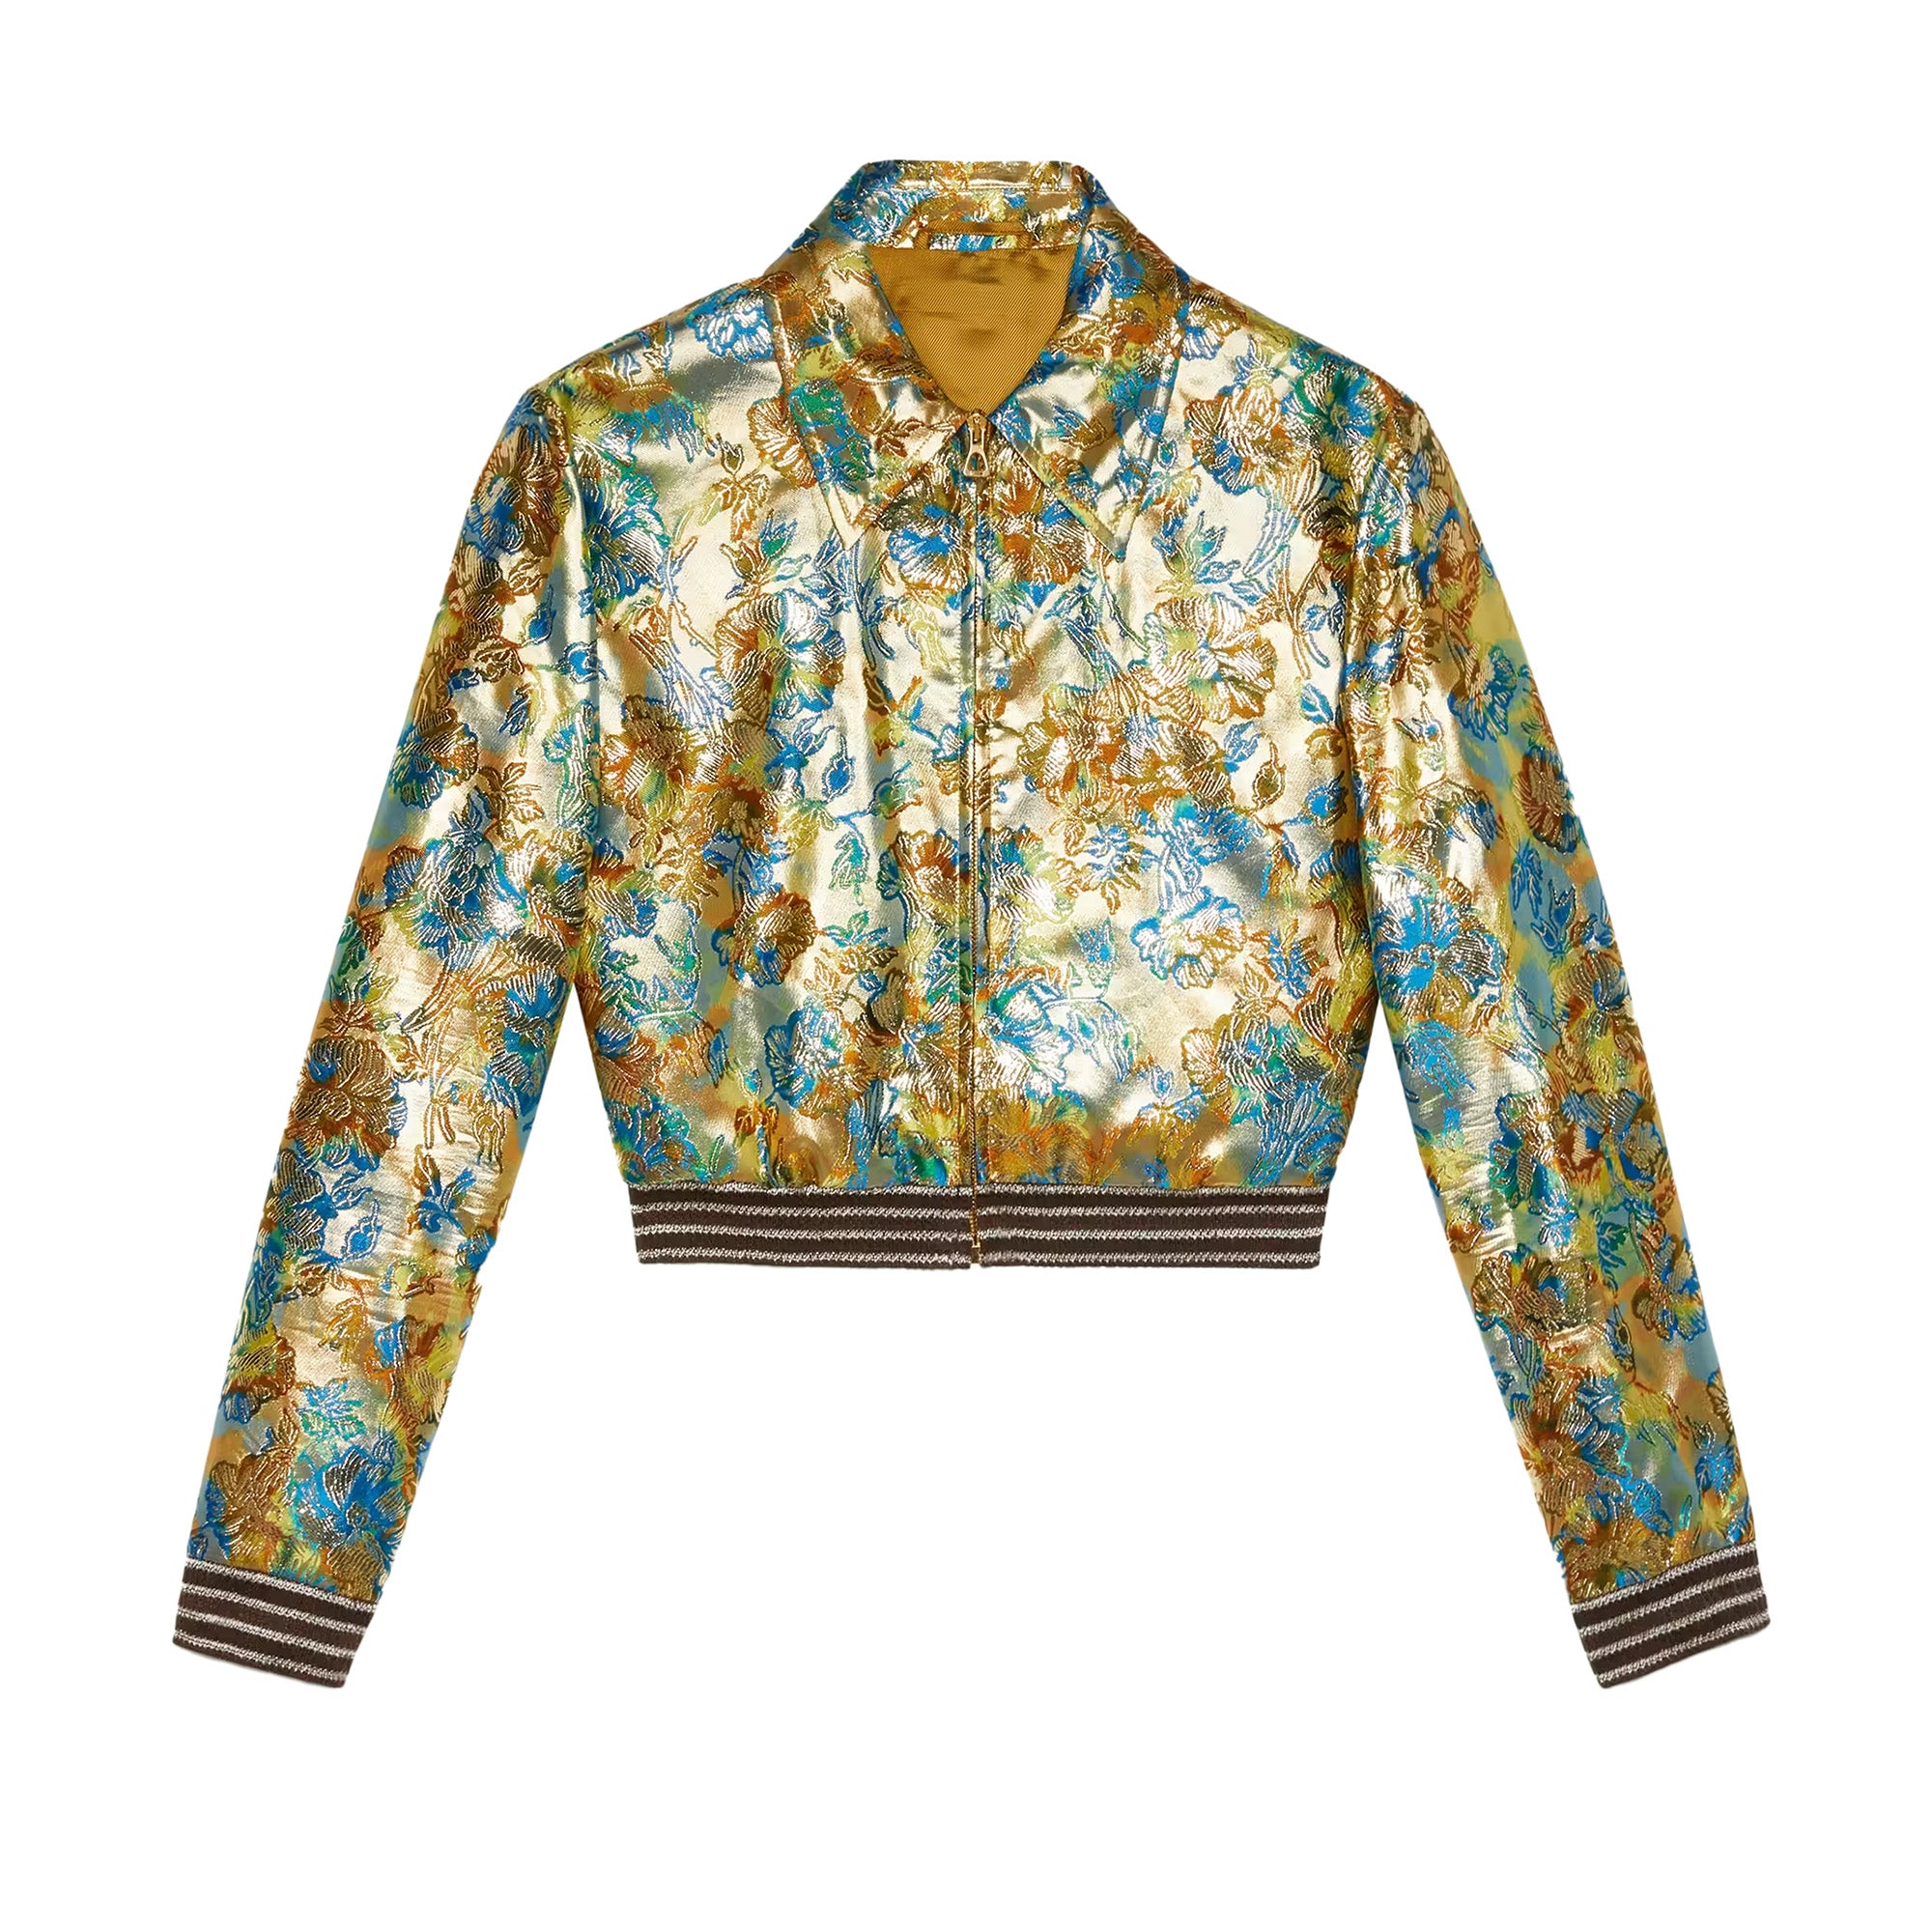 Gucci - Men’s Floral jacquard Silk Jacket - (Multi)